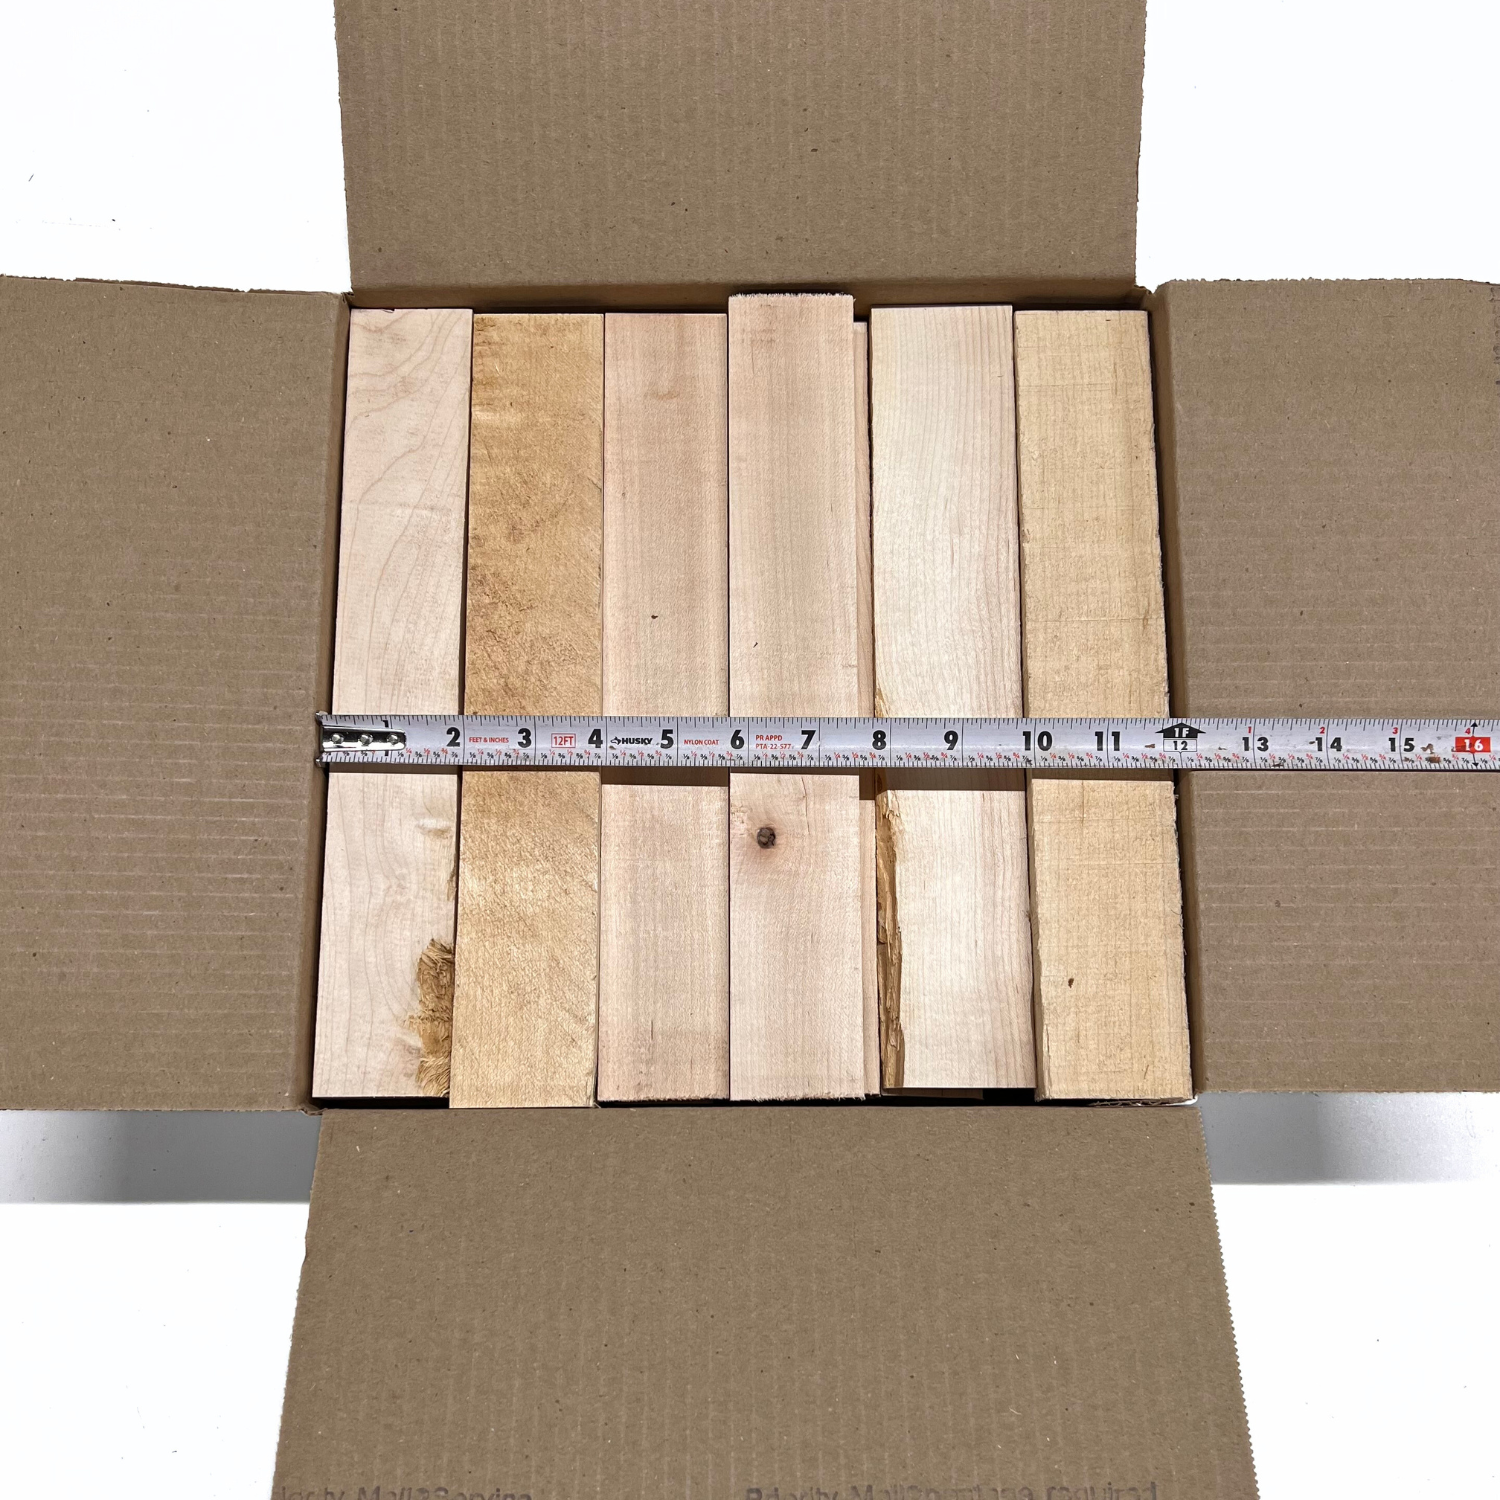 Caja de madera 12 x 12 x 4